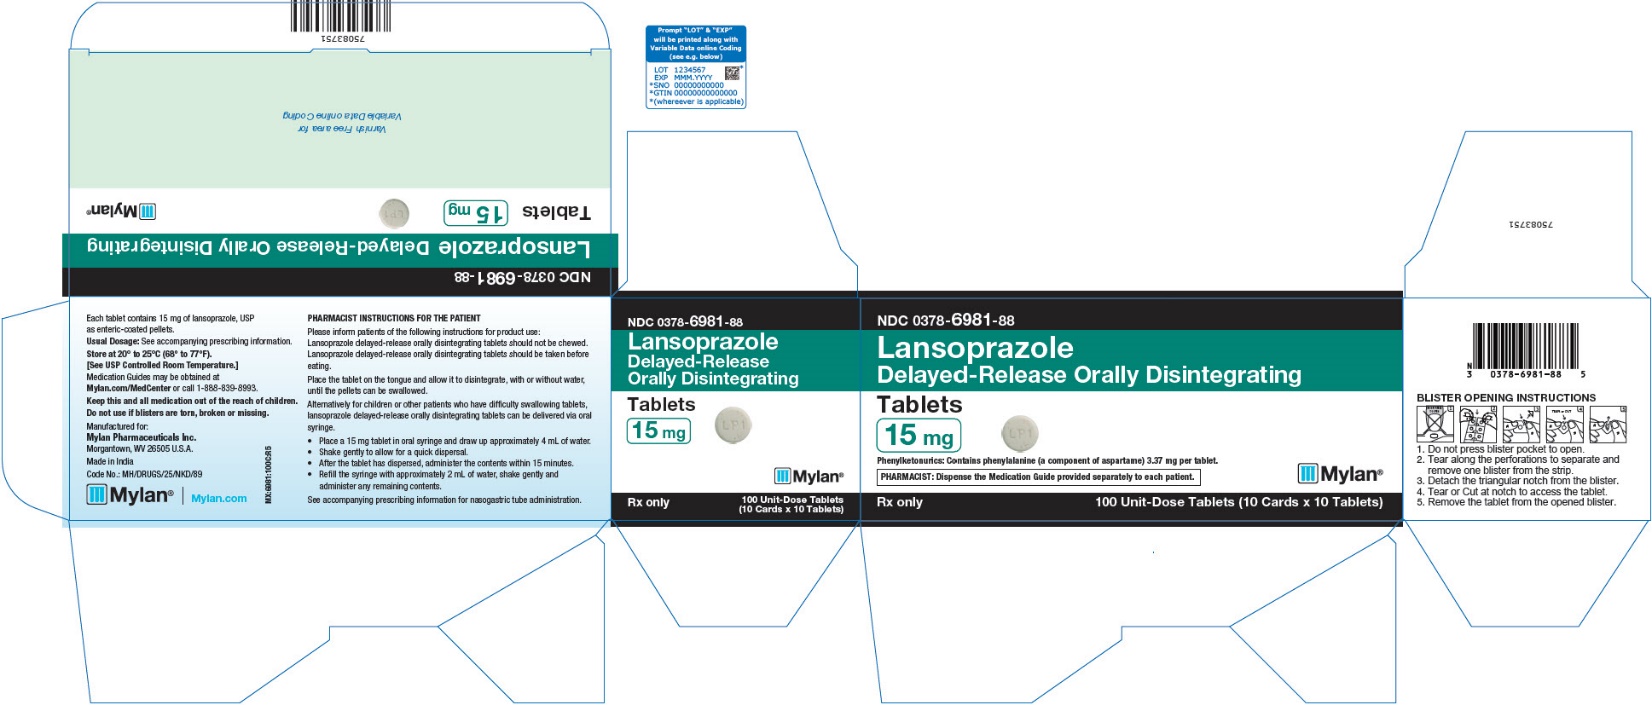 Lansoprazole Delayed-Release Orally Disintegrating Tablets 15 mg Carton Label